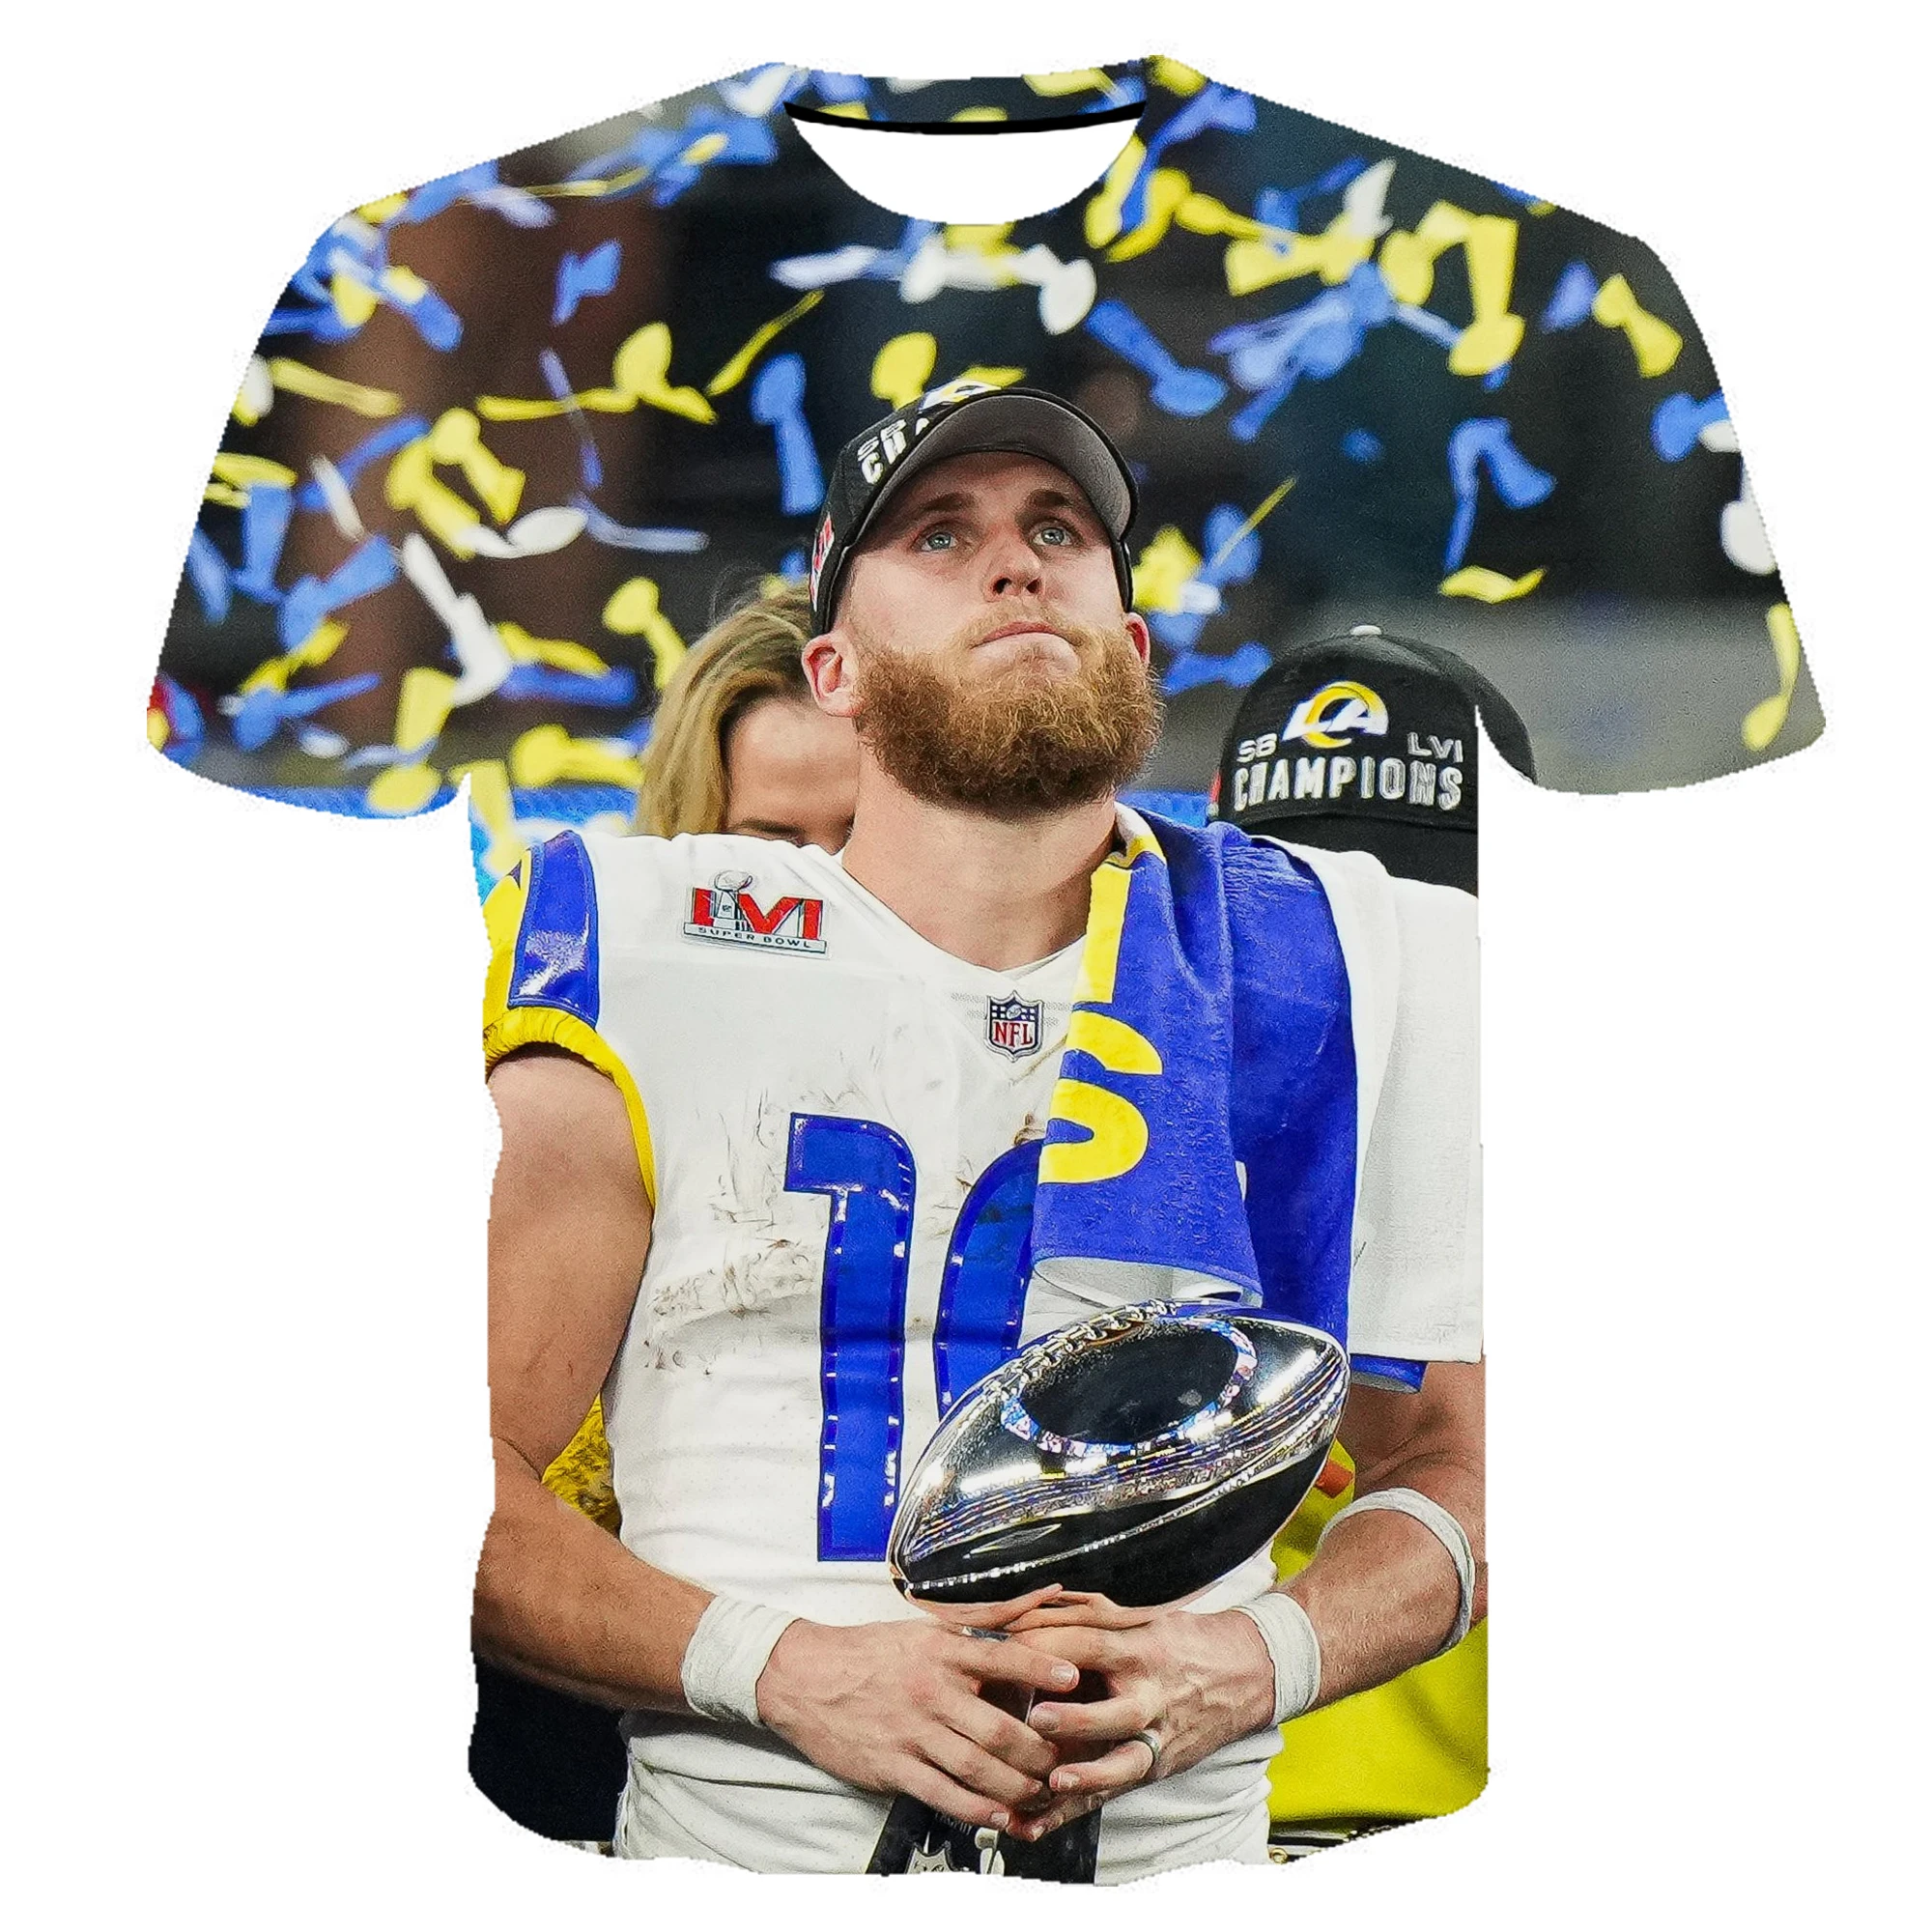 Fanatics Branded Cooper Kupp Black Los Angeles Rams Super Bowl LVI Champions MVP T-Shirt